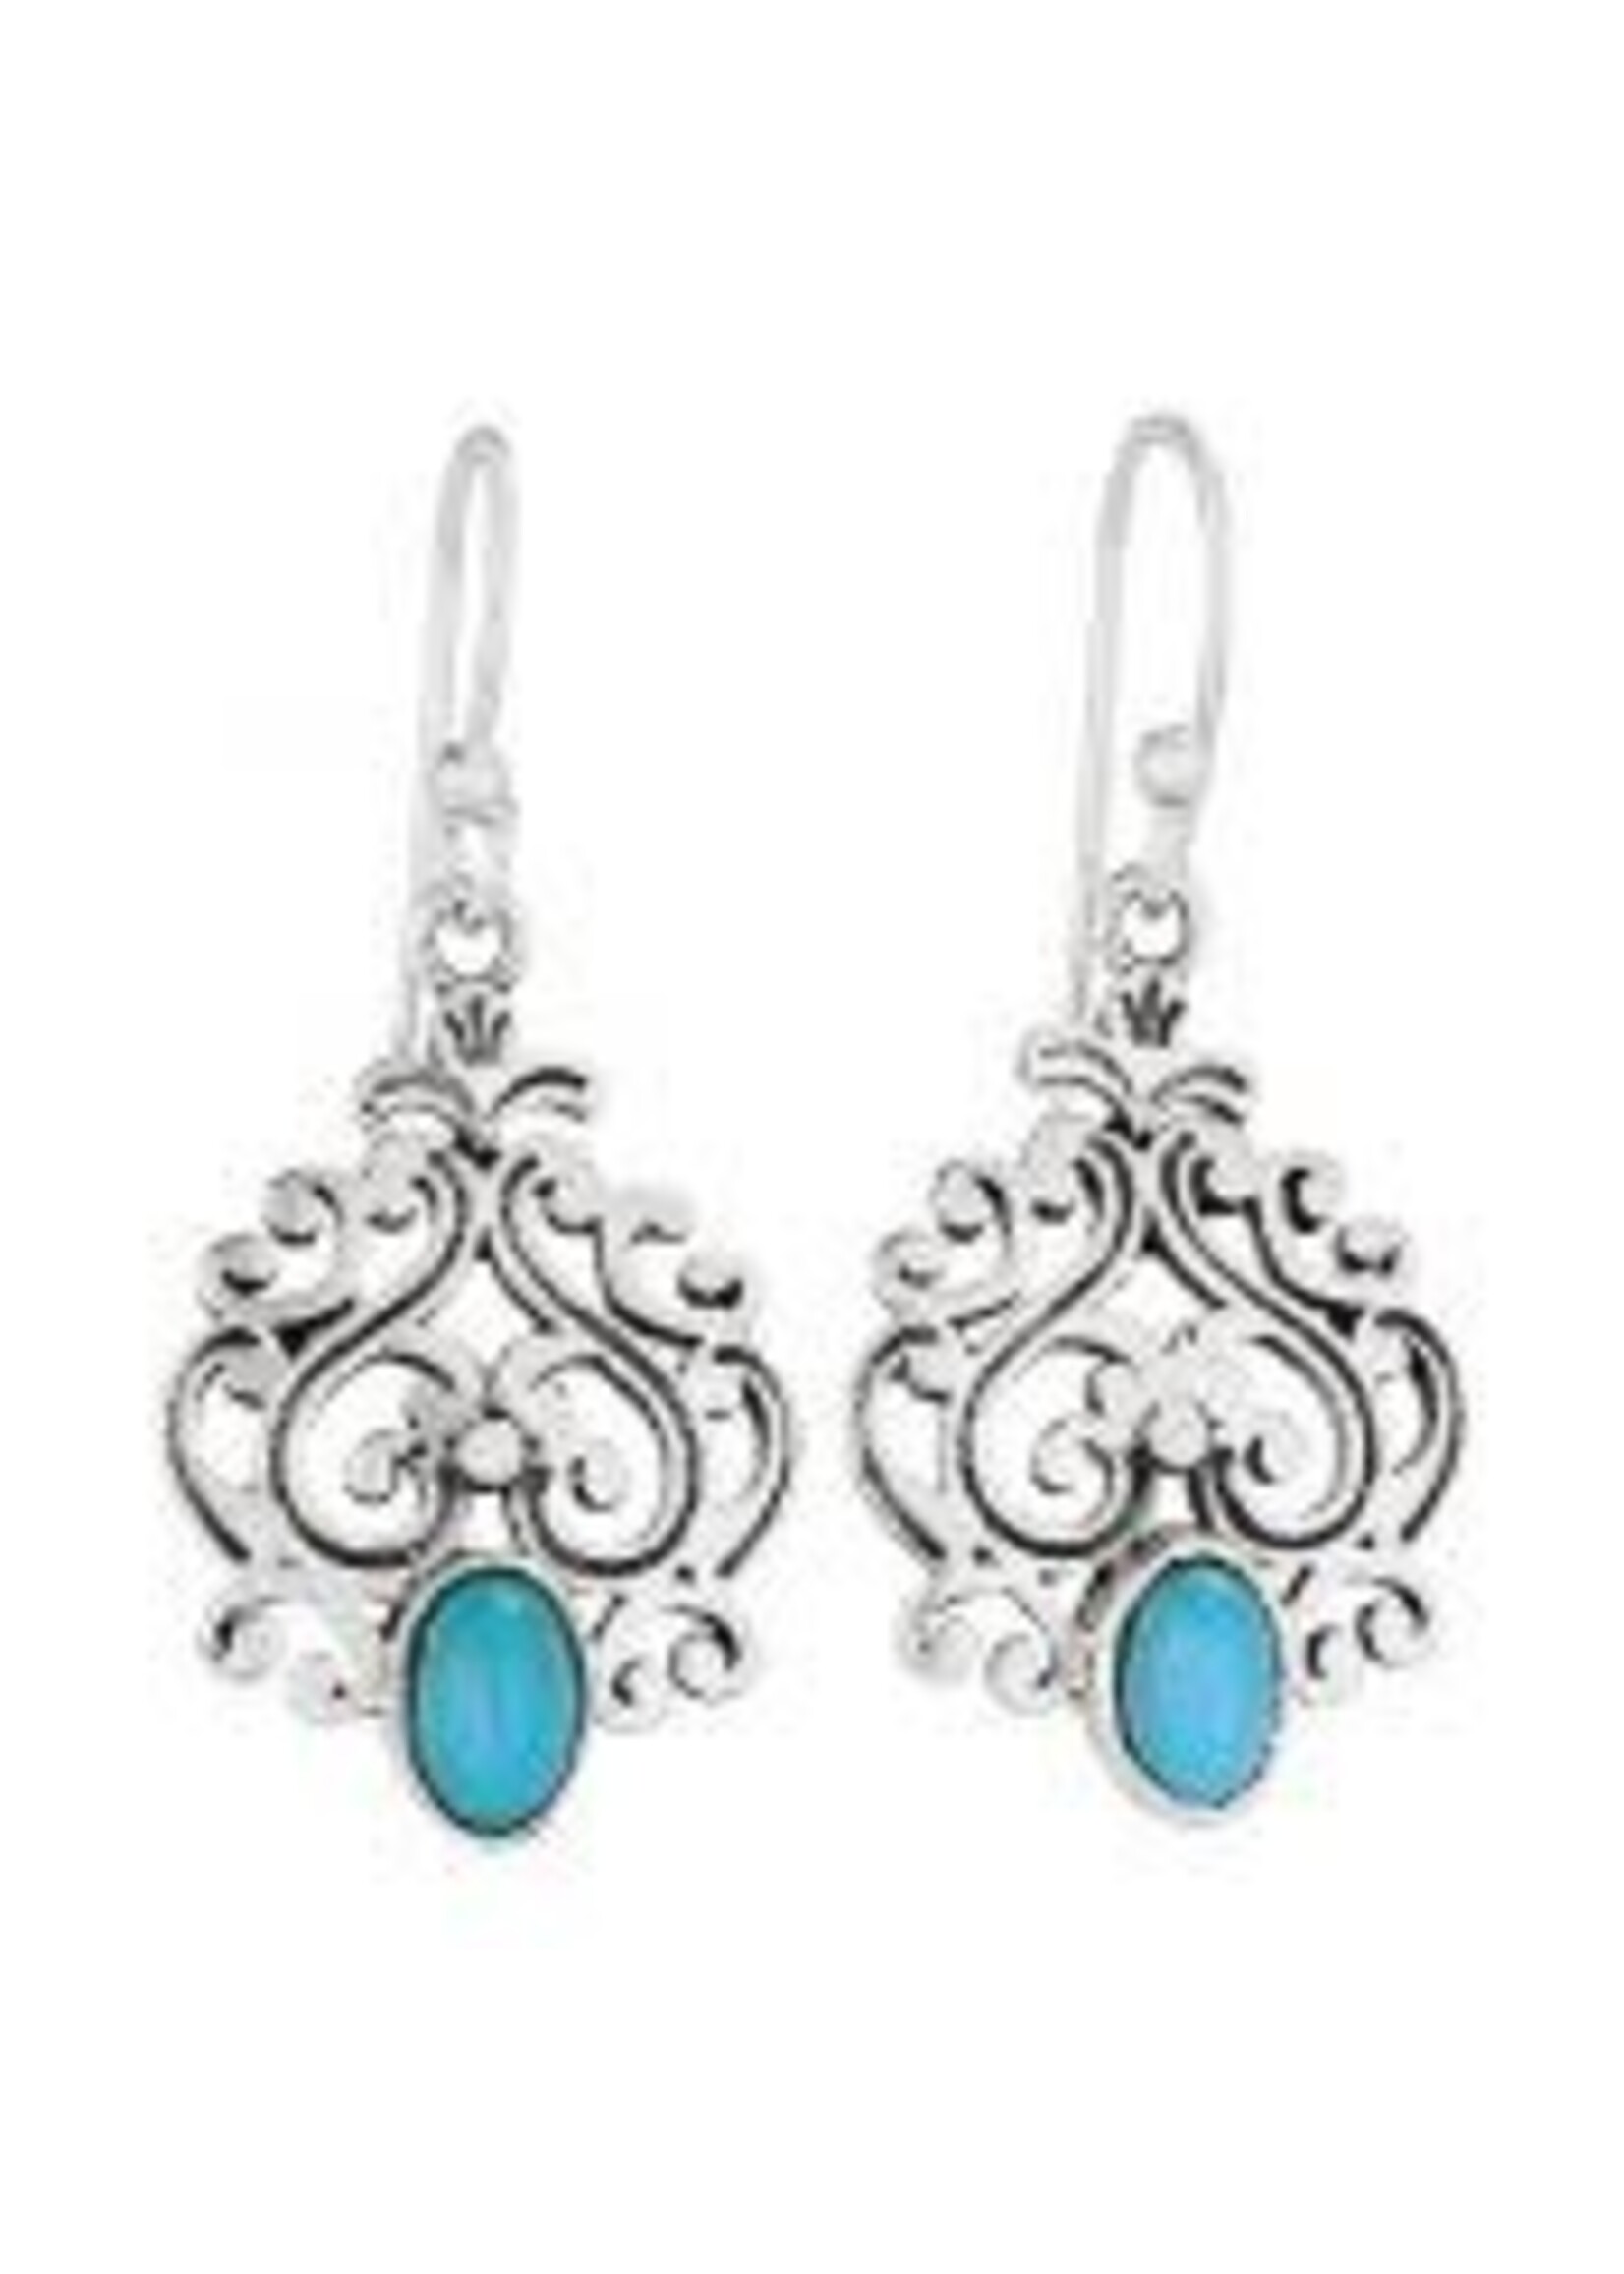 Earrings Turquoise in Decorative  Open Design